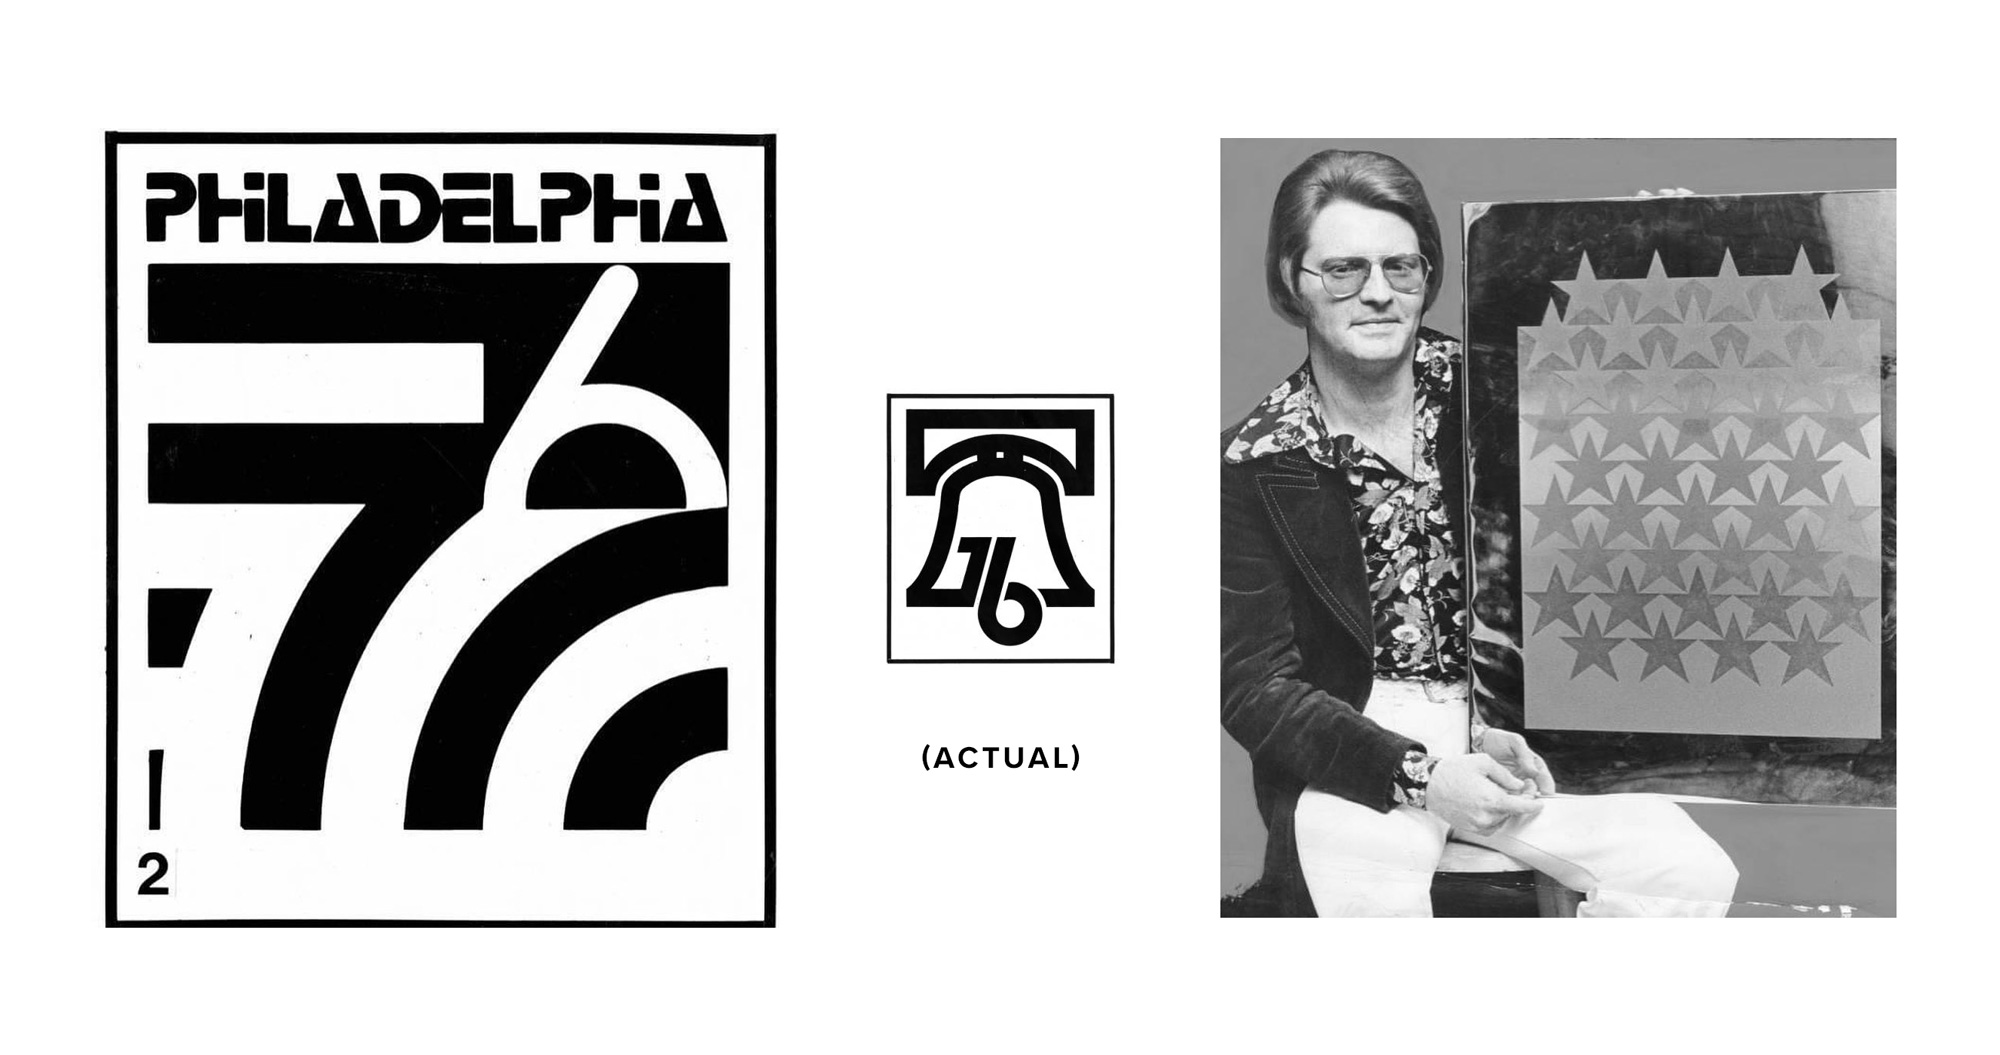 Philadelphia's Bicentennial Logo Entries